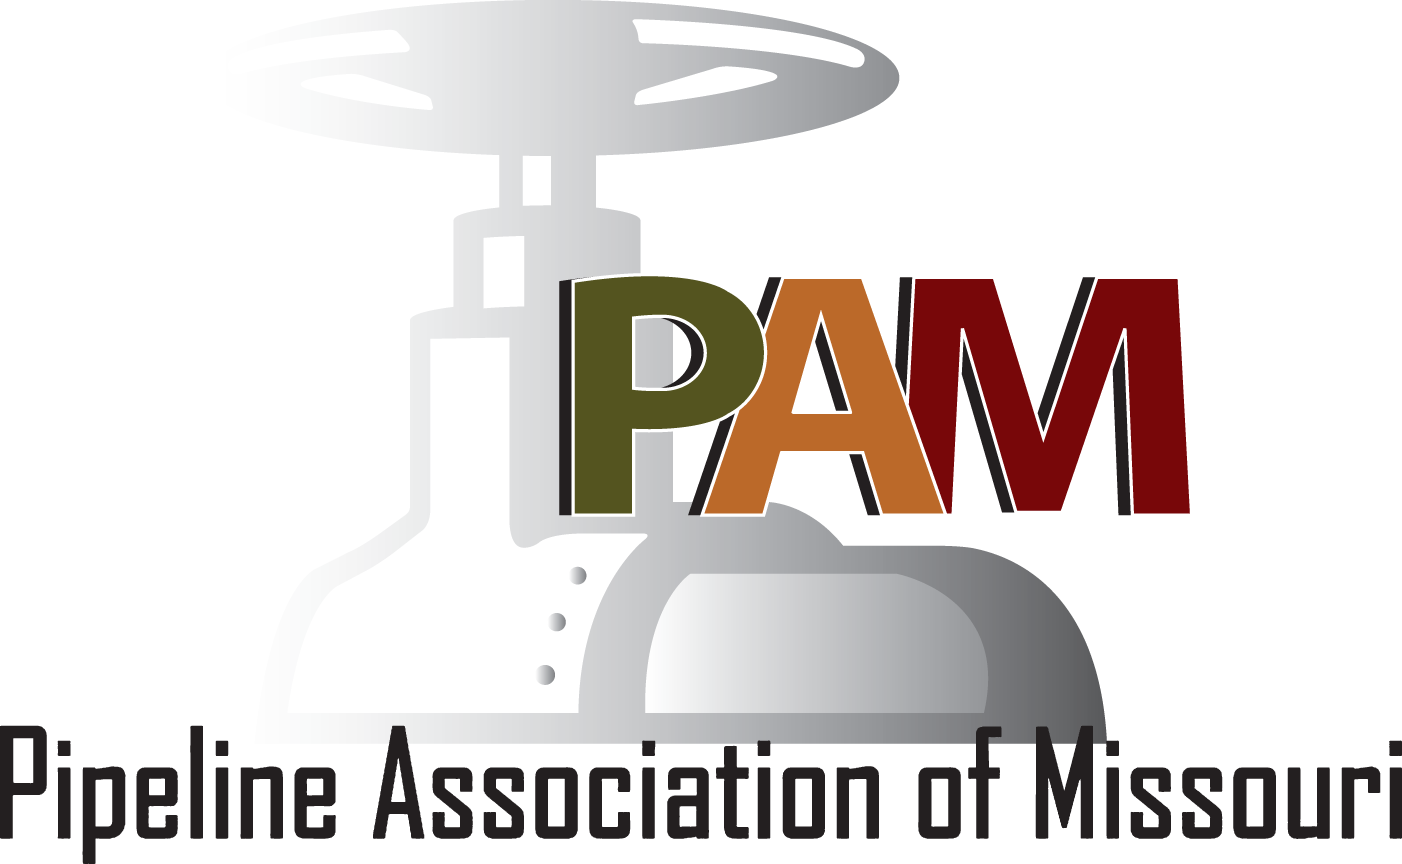 Pipeline Association of Missouri (PAM)